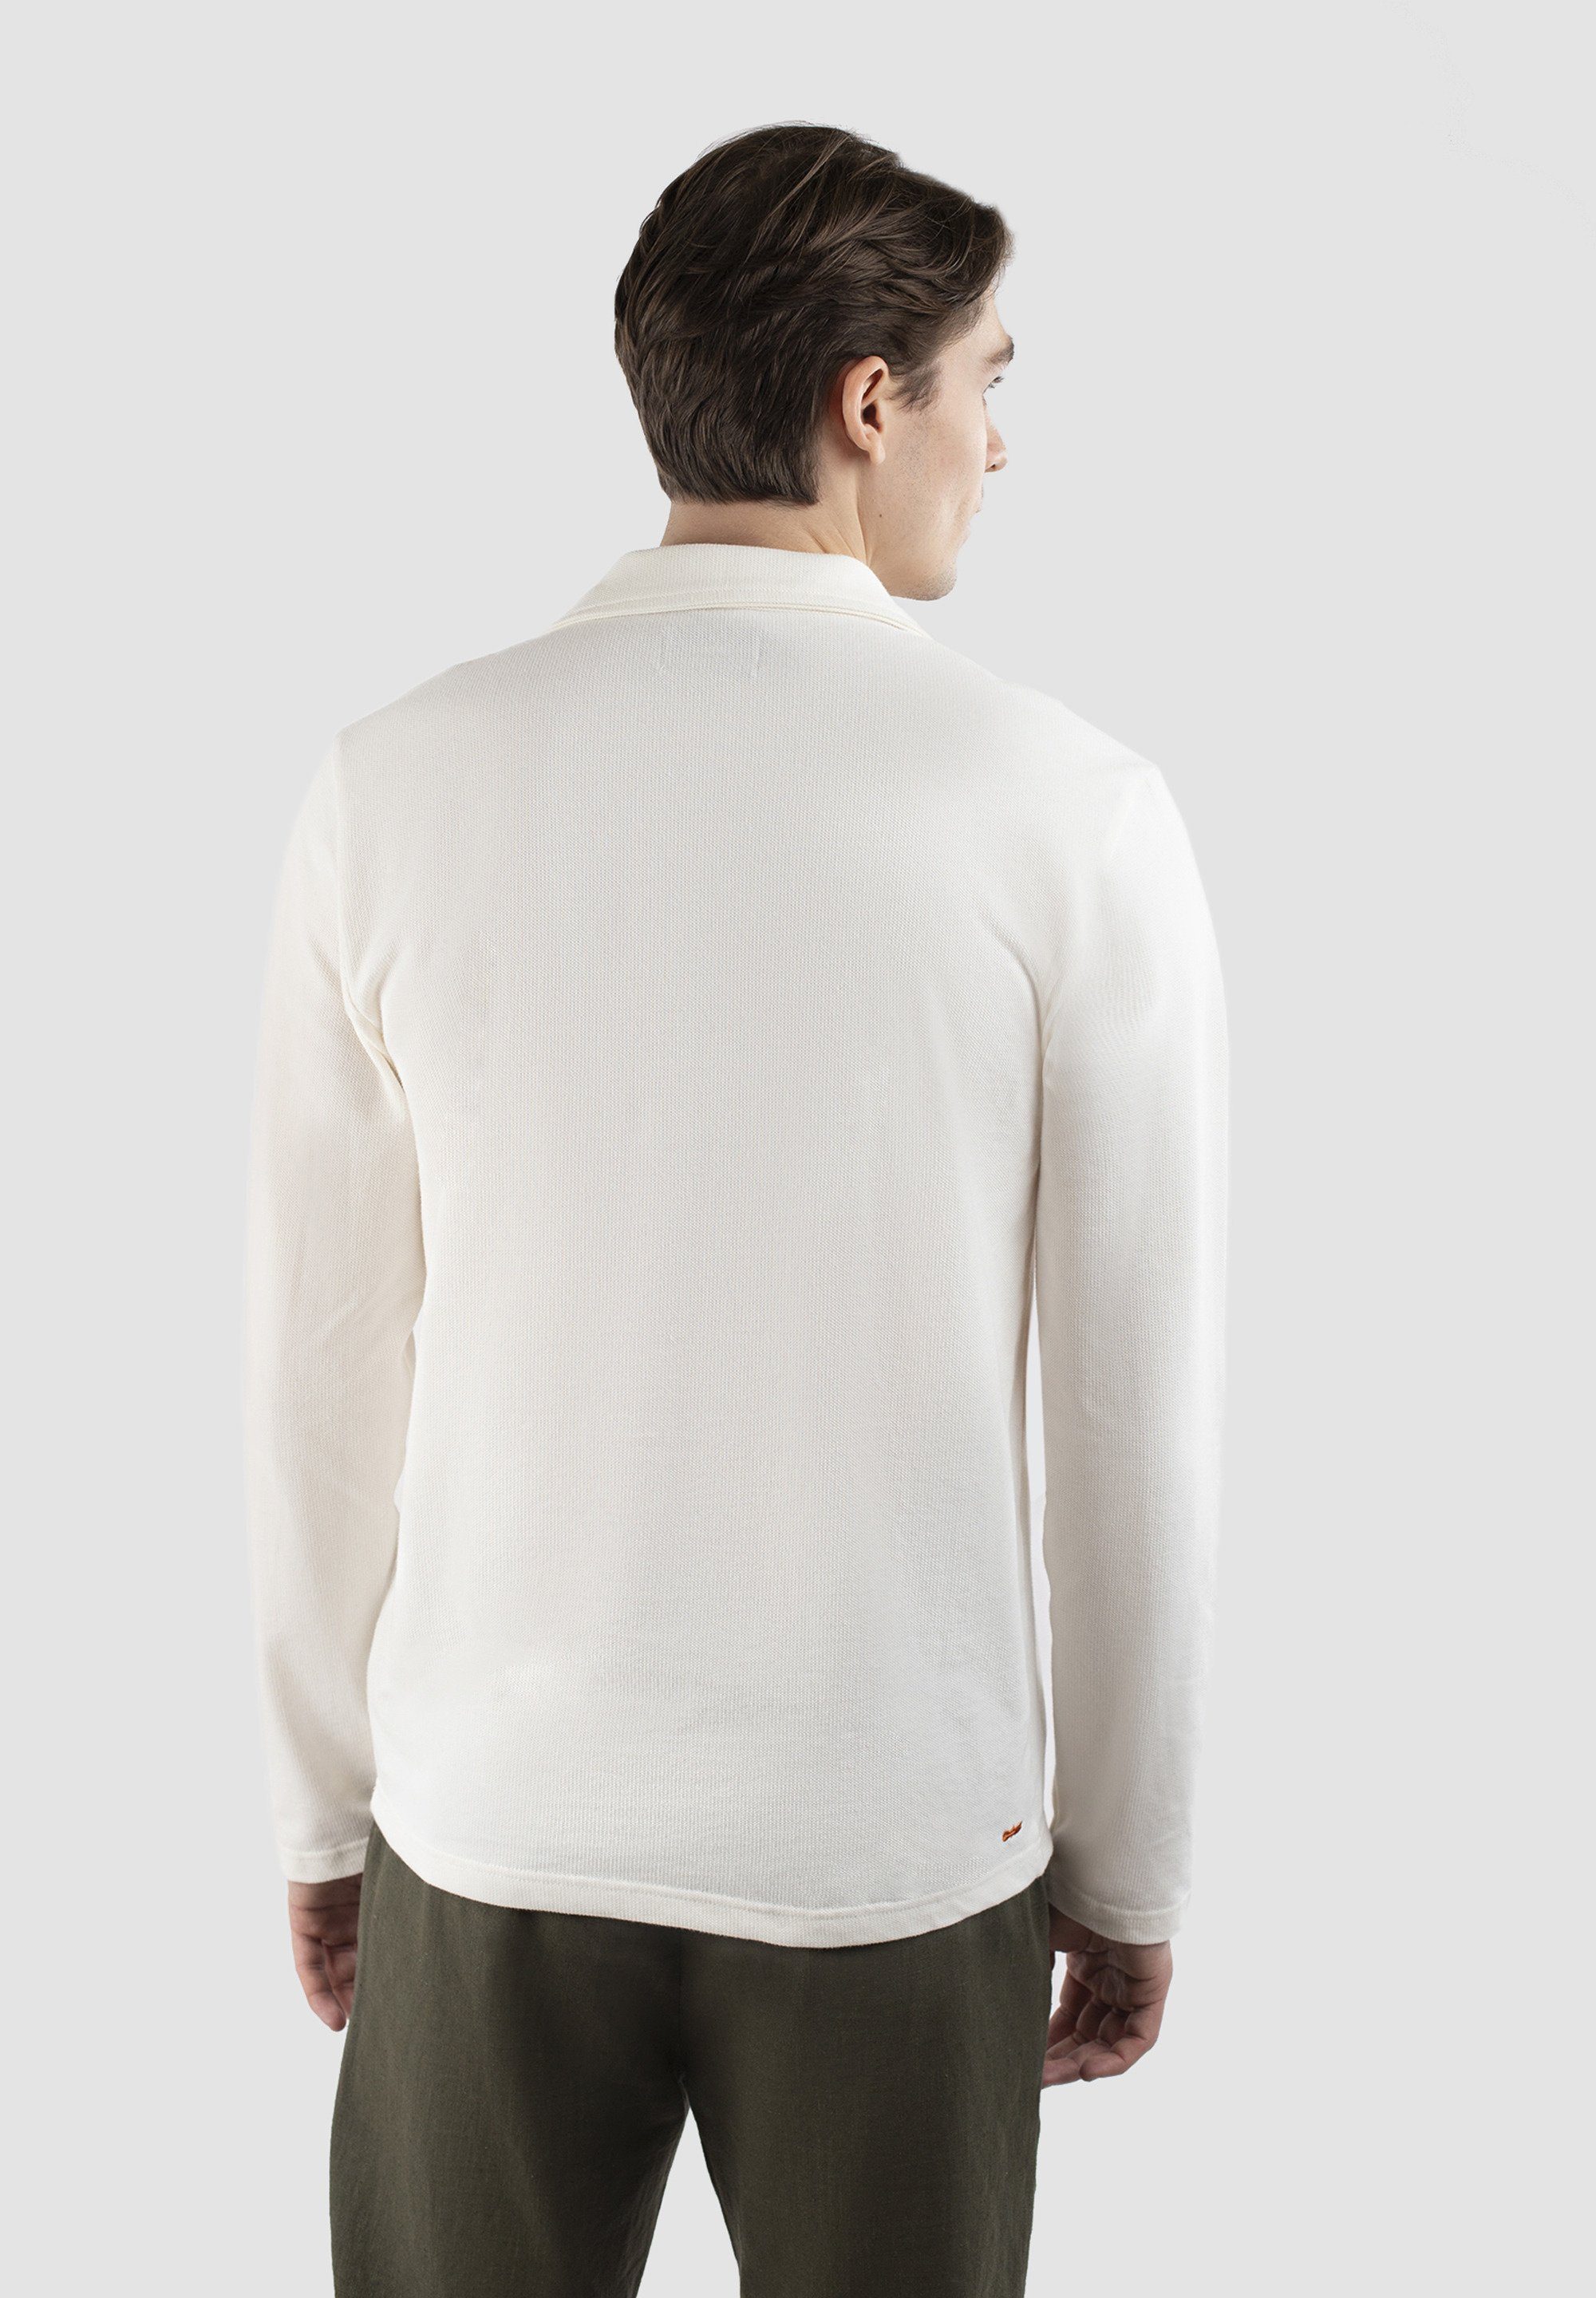 Ciszere Poloshirt collar. Nelson Polo shirt open off-white with